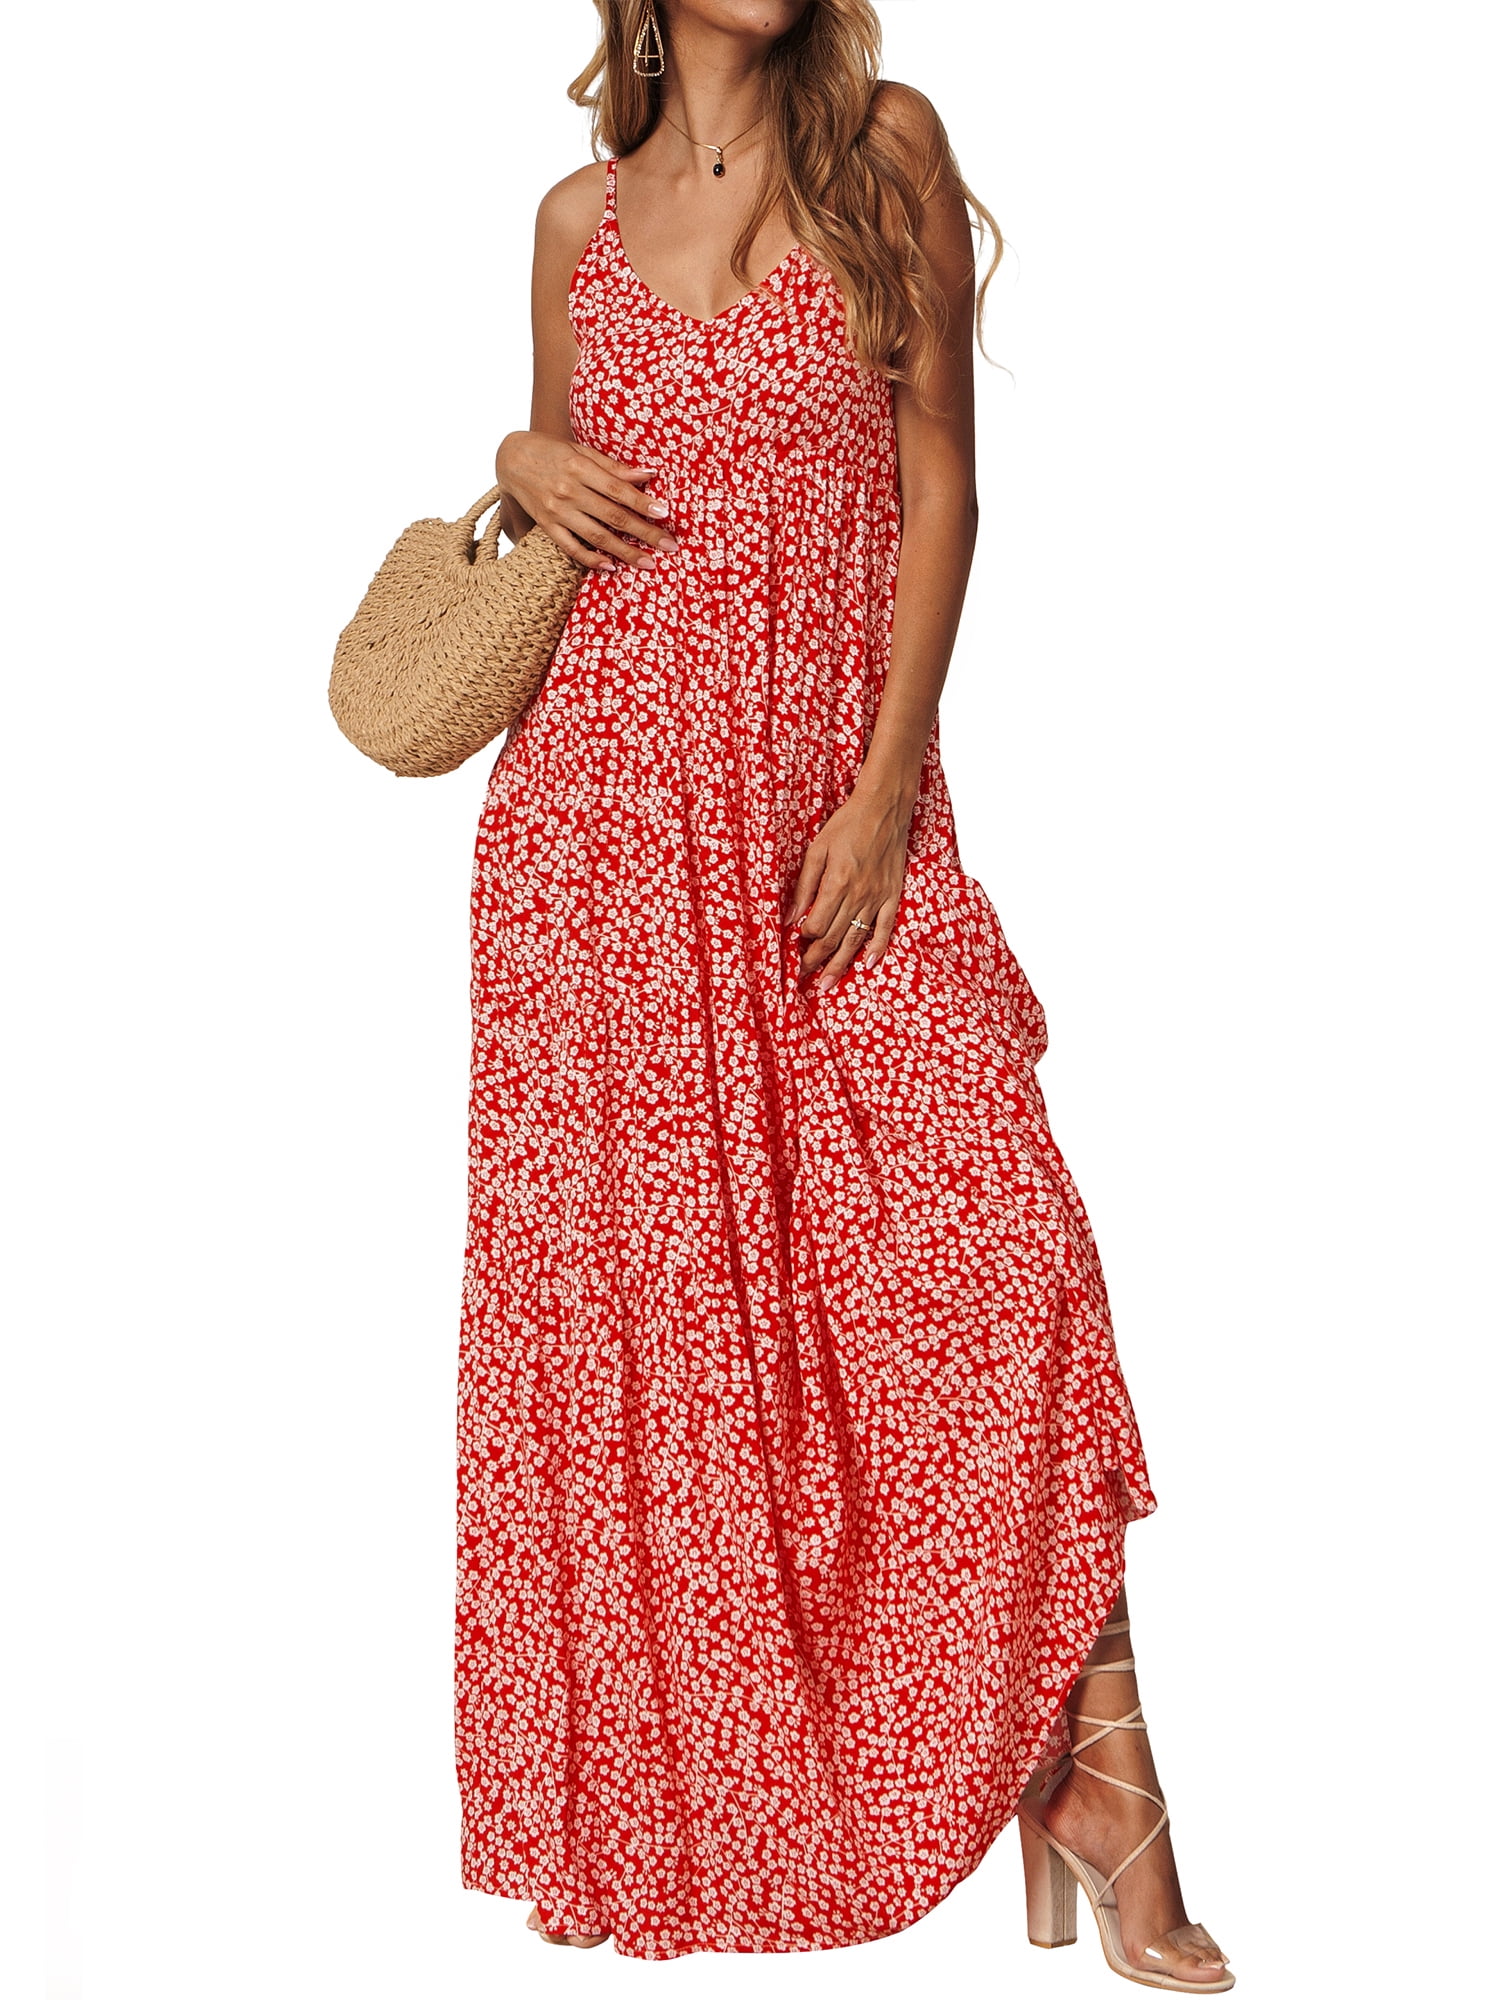 KYLEON Bohemian Womens Maxi Dress Summer Gradient Strap Sleeveless Casual Loose Tunic Long Maxi Beach Party Sundress 